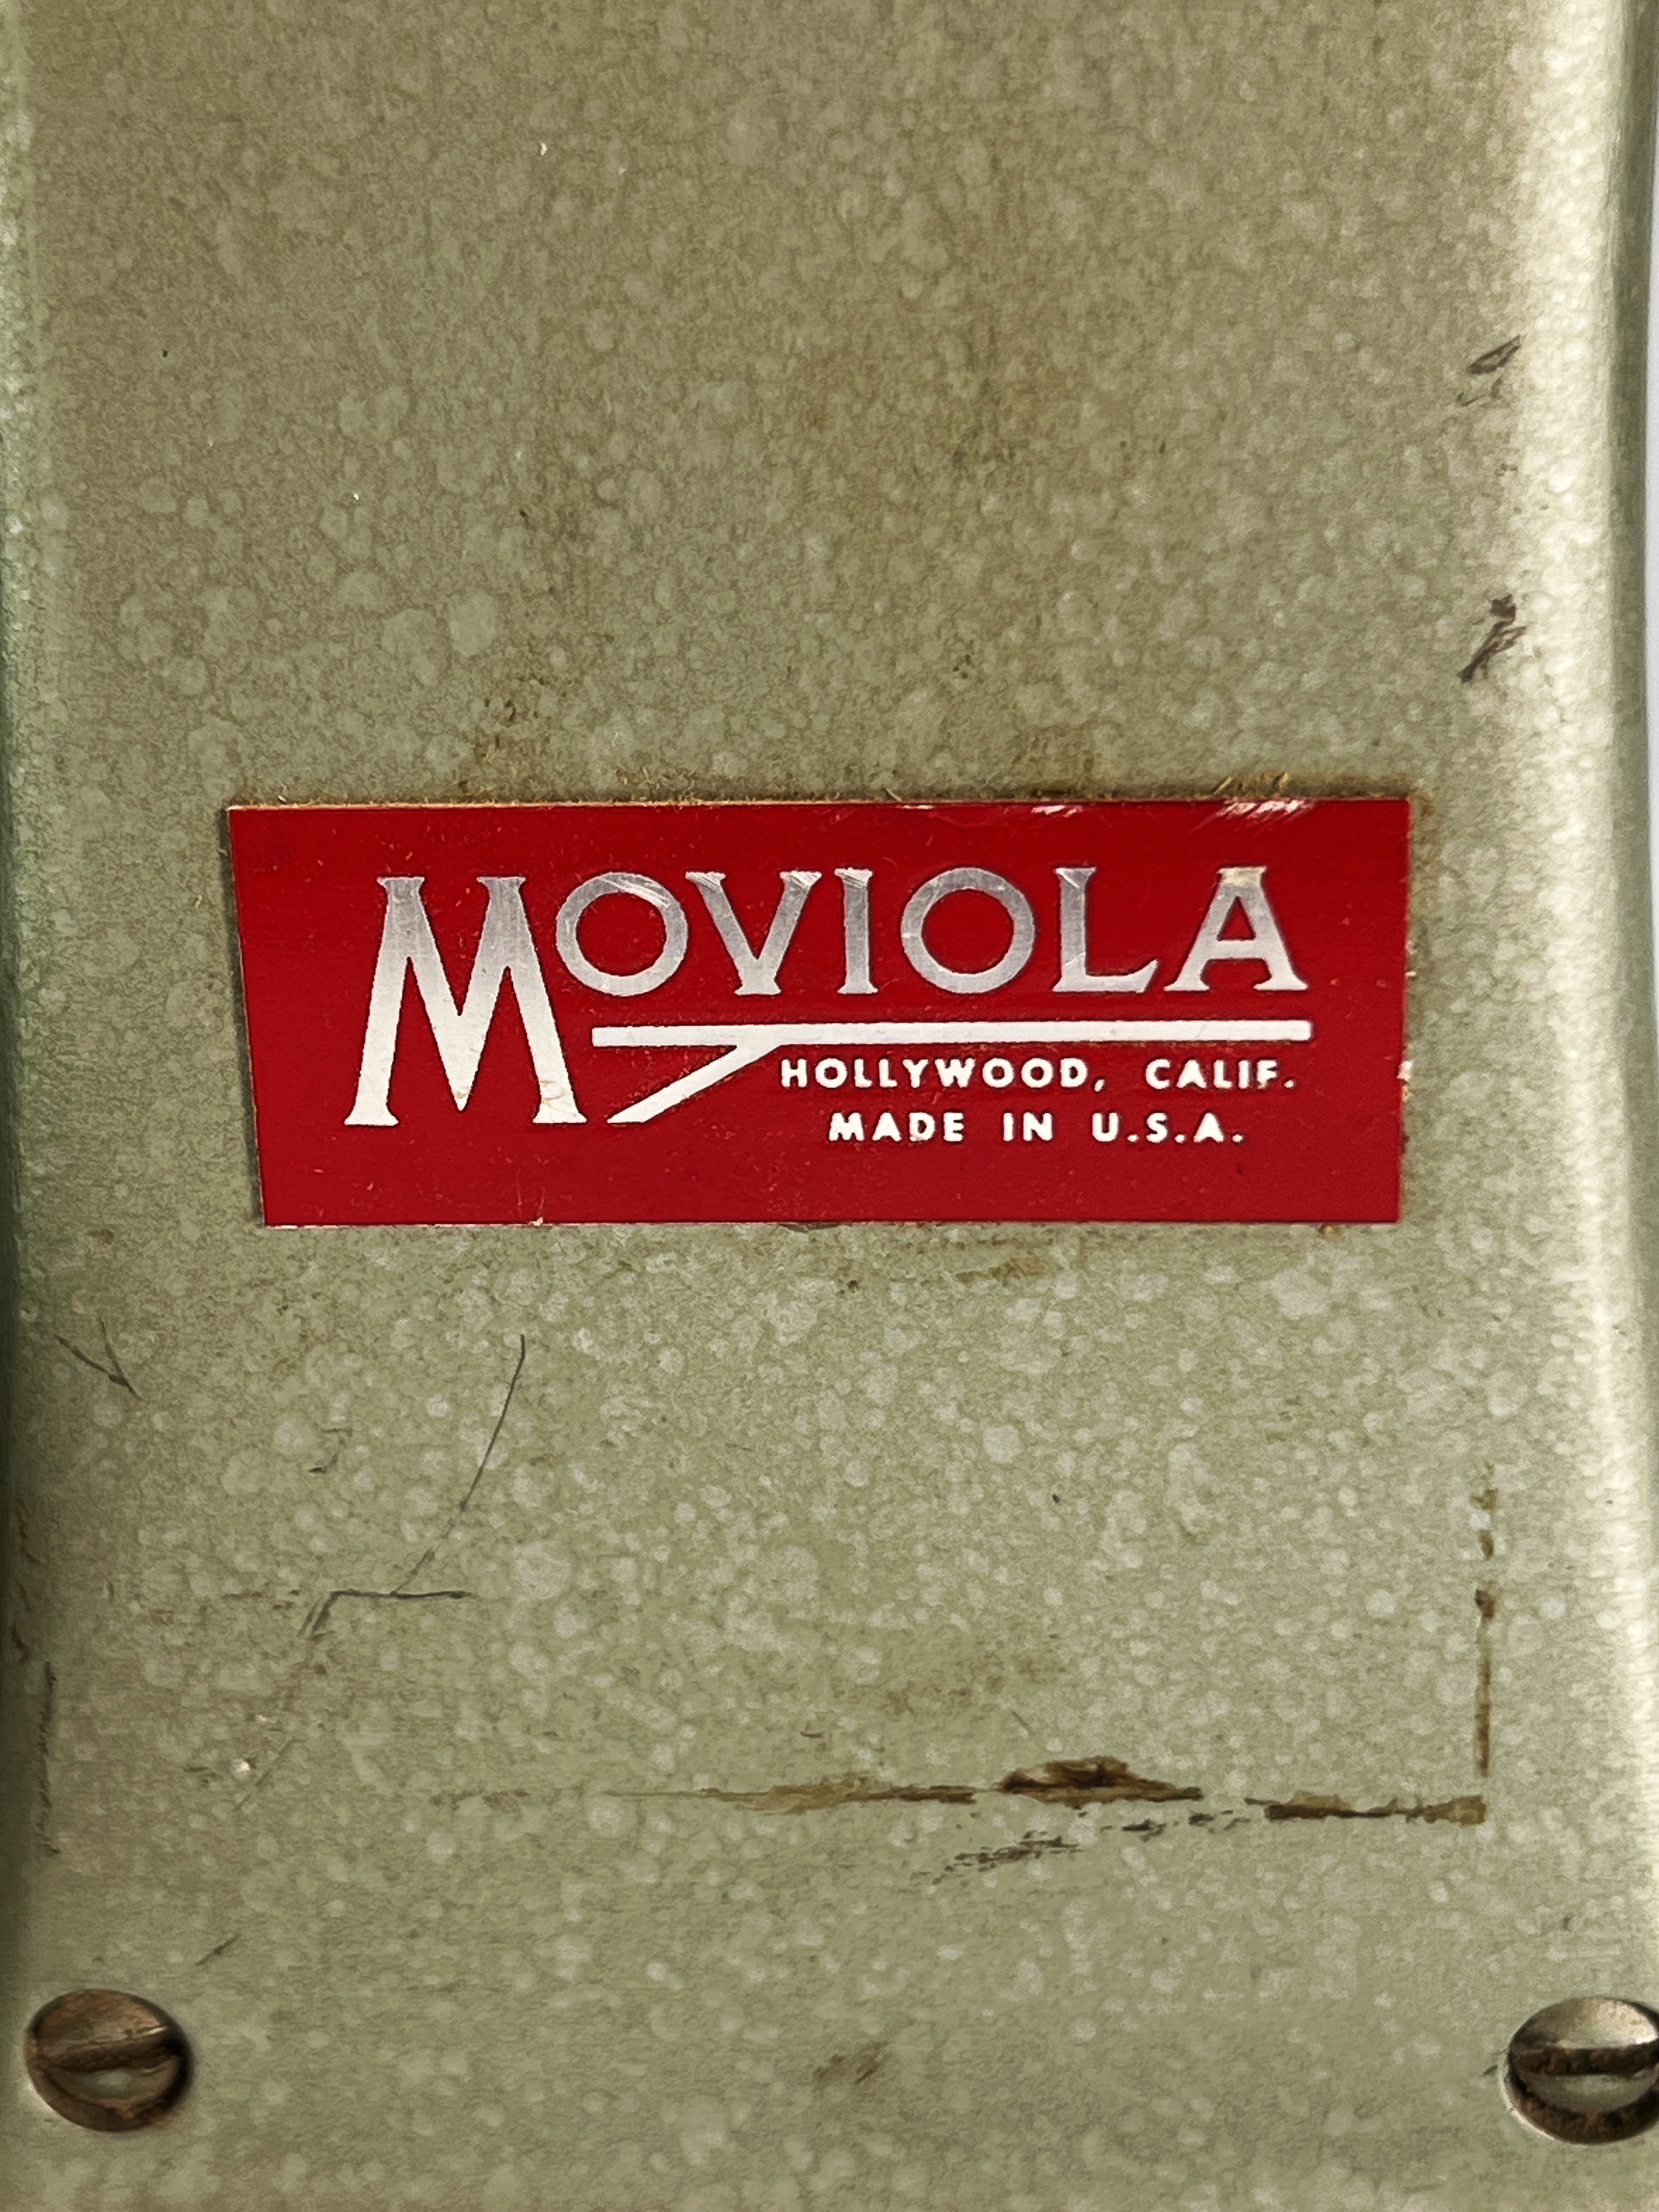 Vintage Moviola Film Editing Equipment image 4